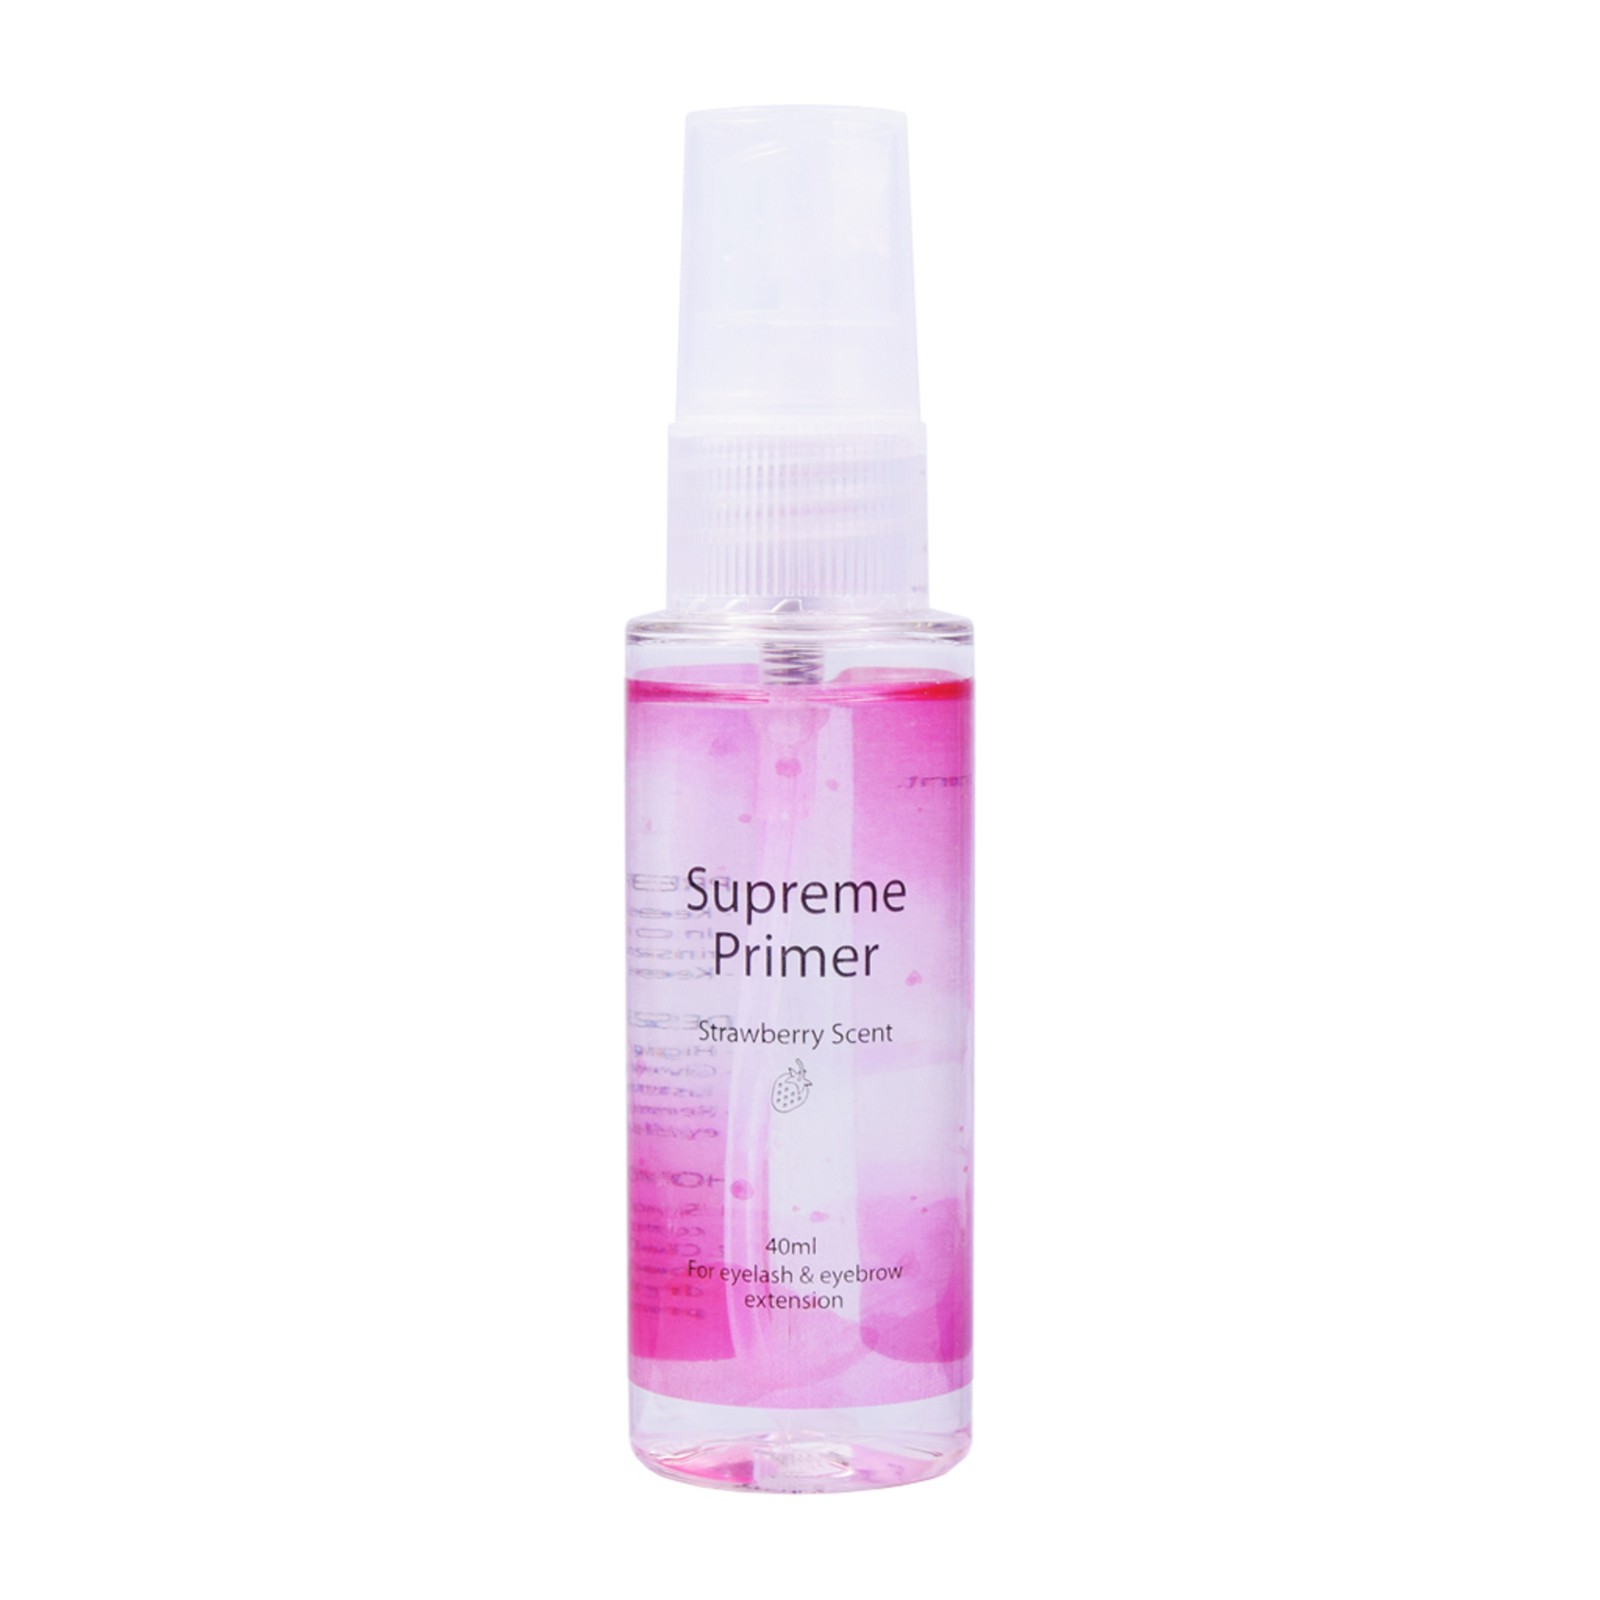 Spray de imprimación suprema -  40ml | Aroma de fresa